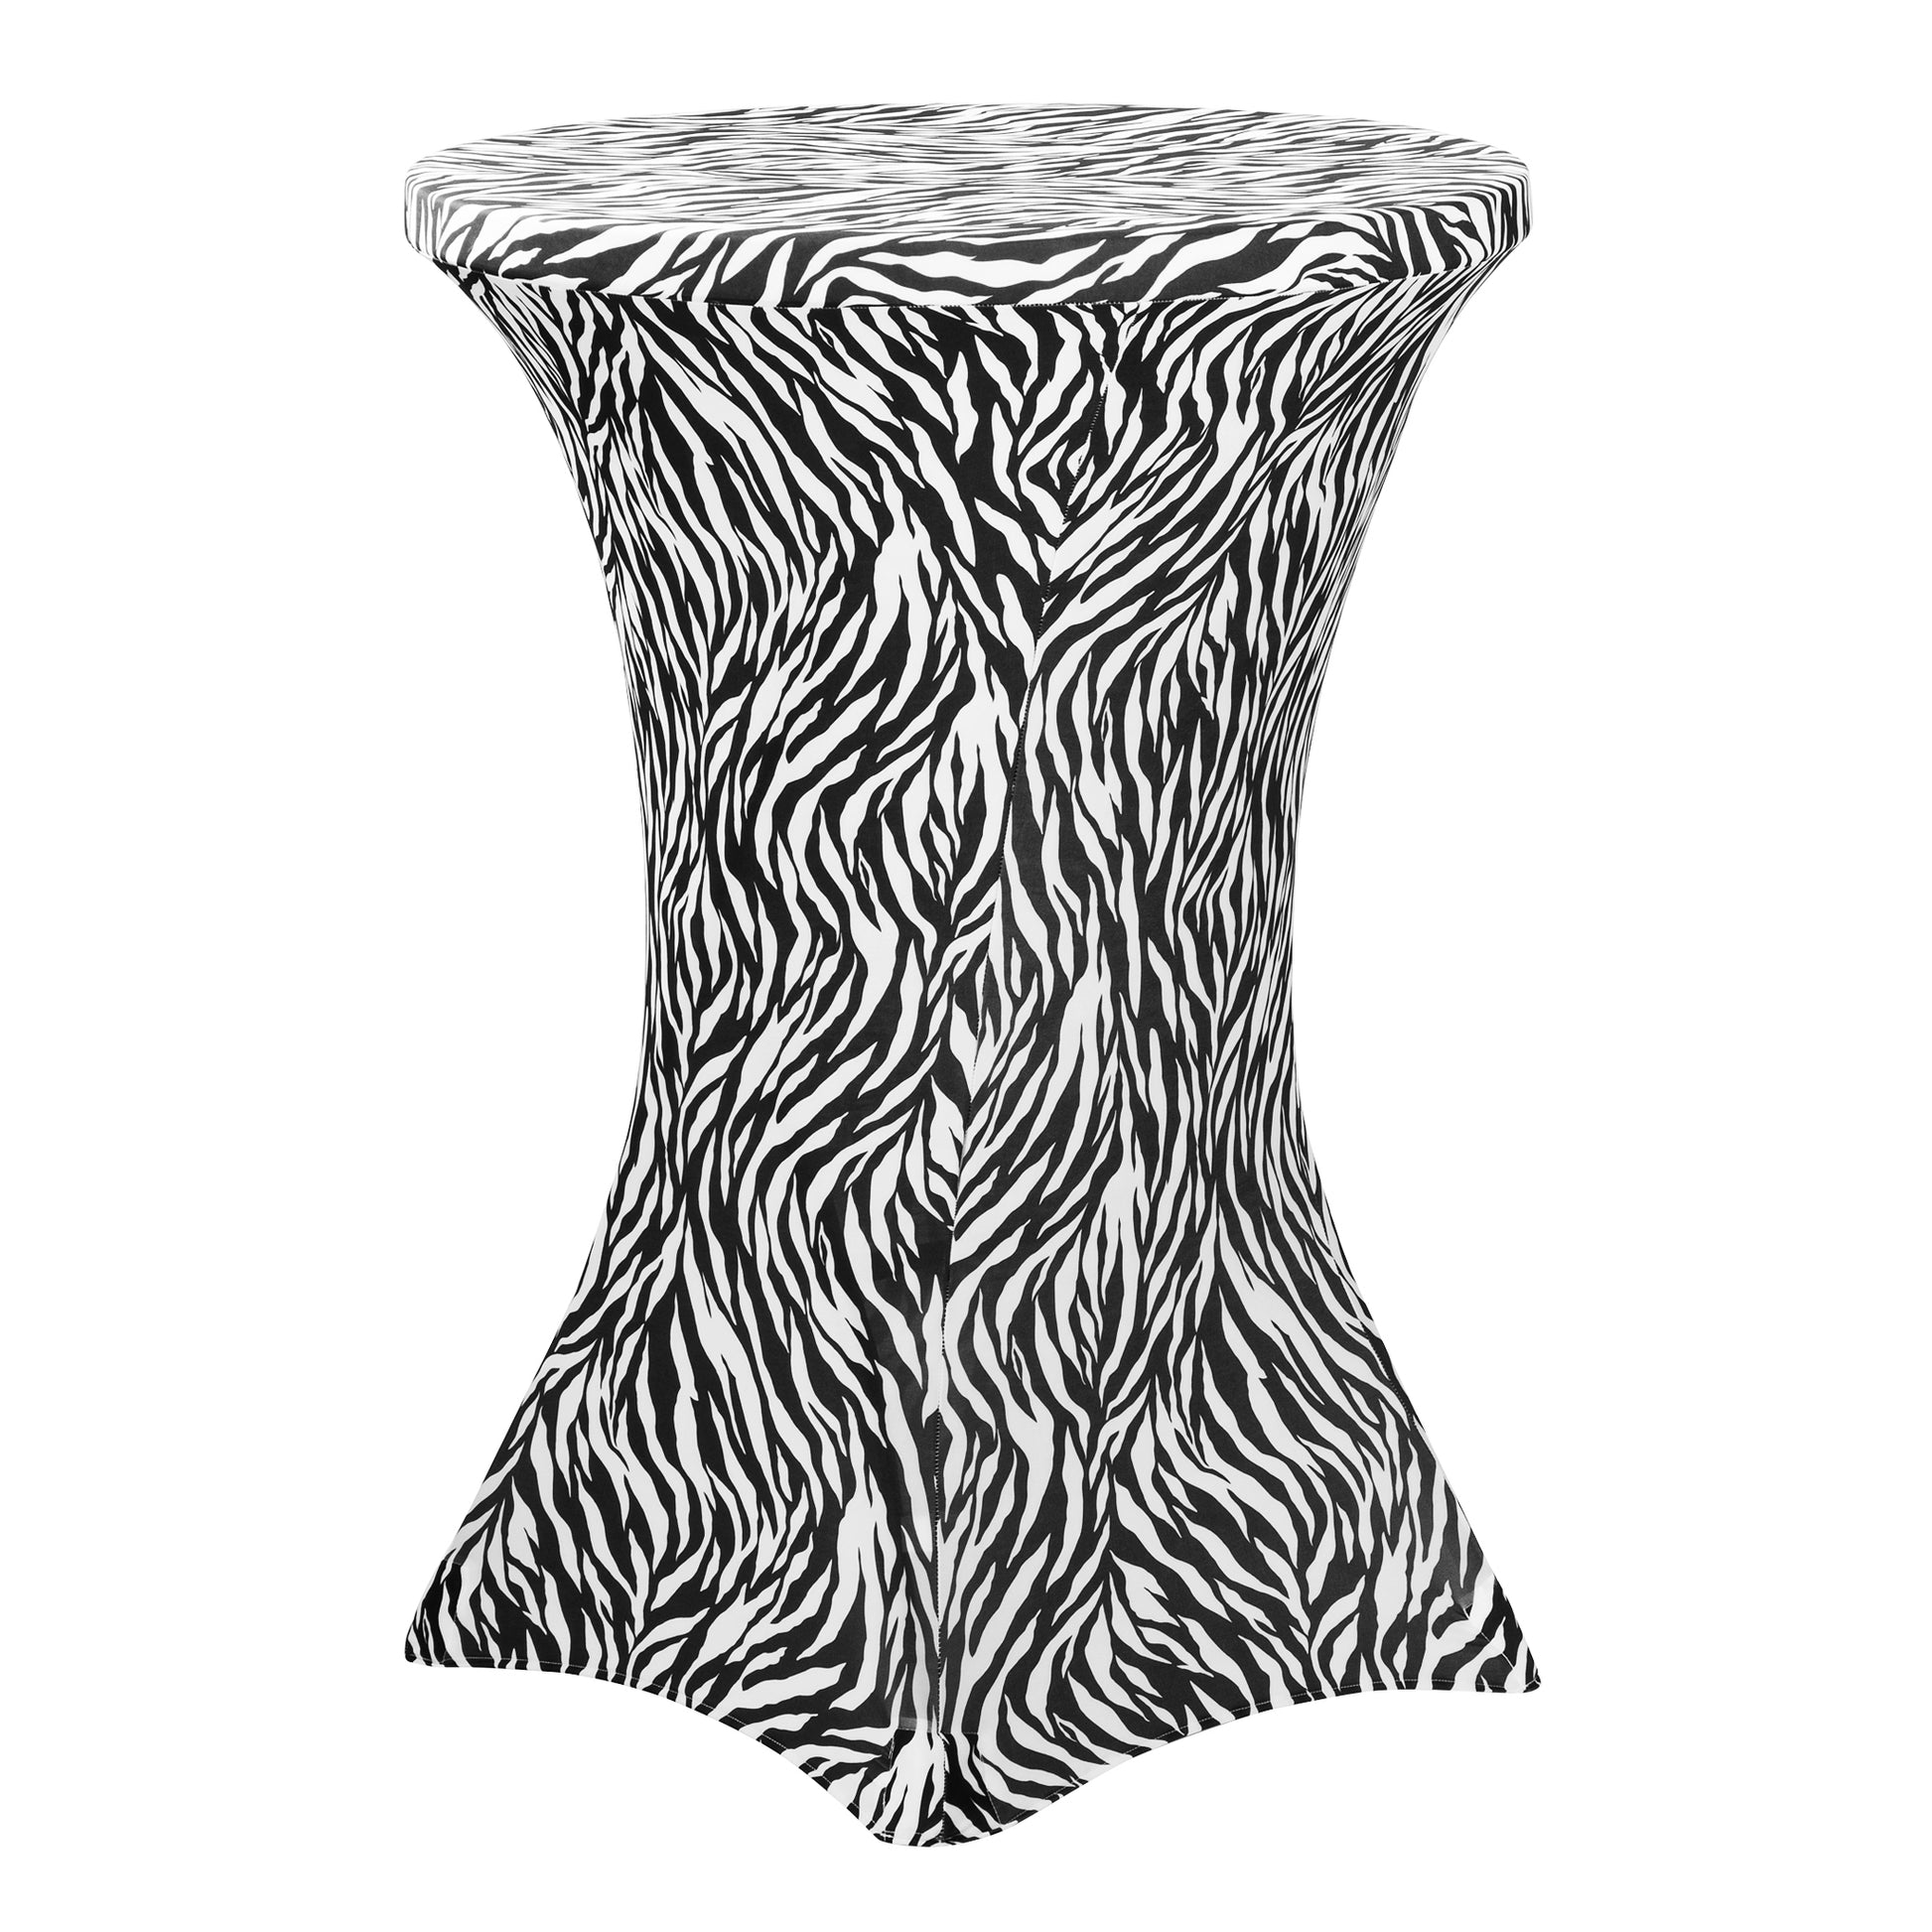 Zebra Spandex Cocktail Table Cover 30" Round - Black & White - CV Linens